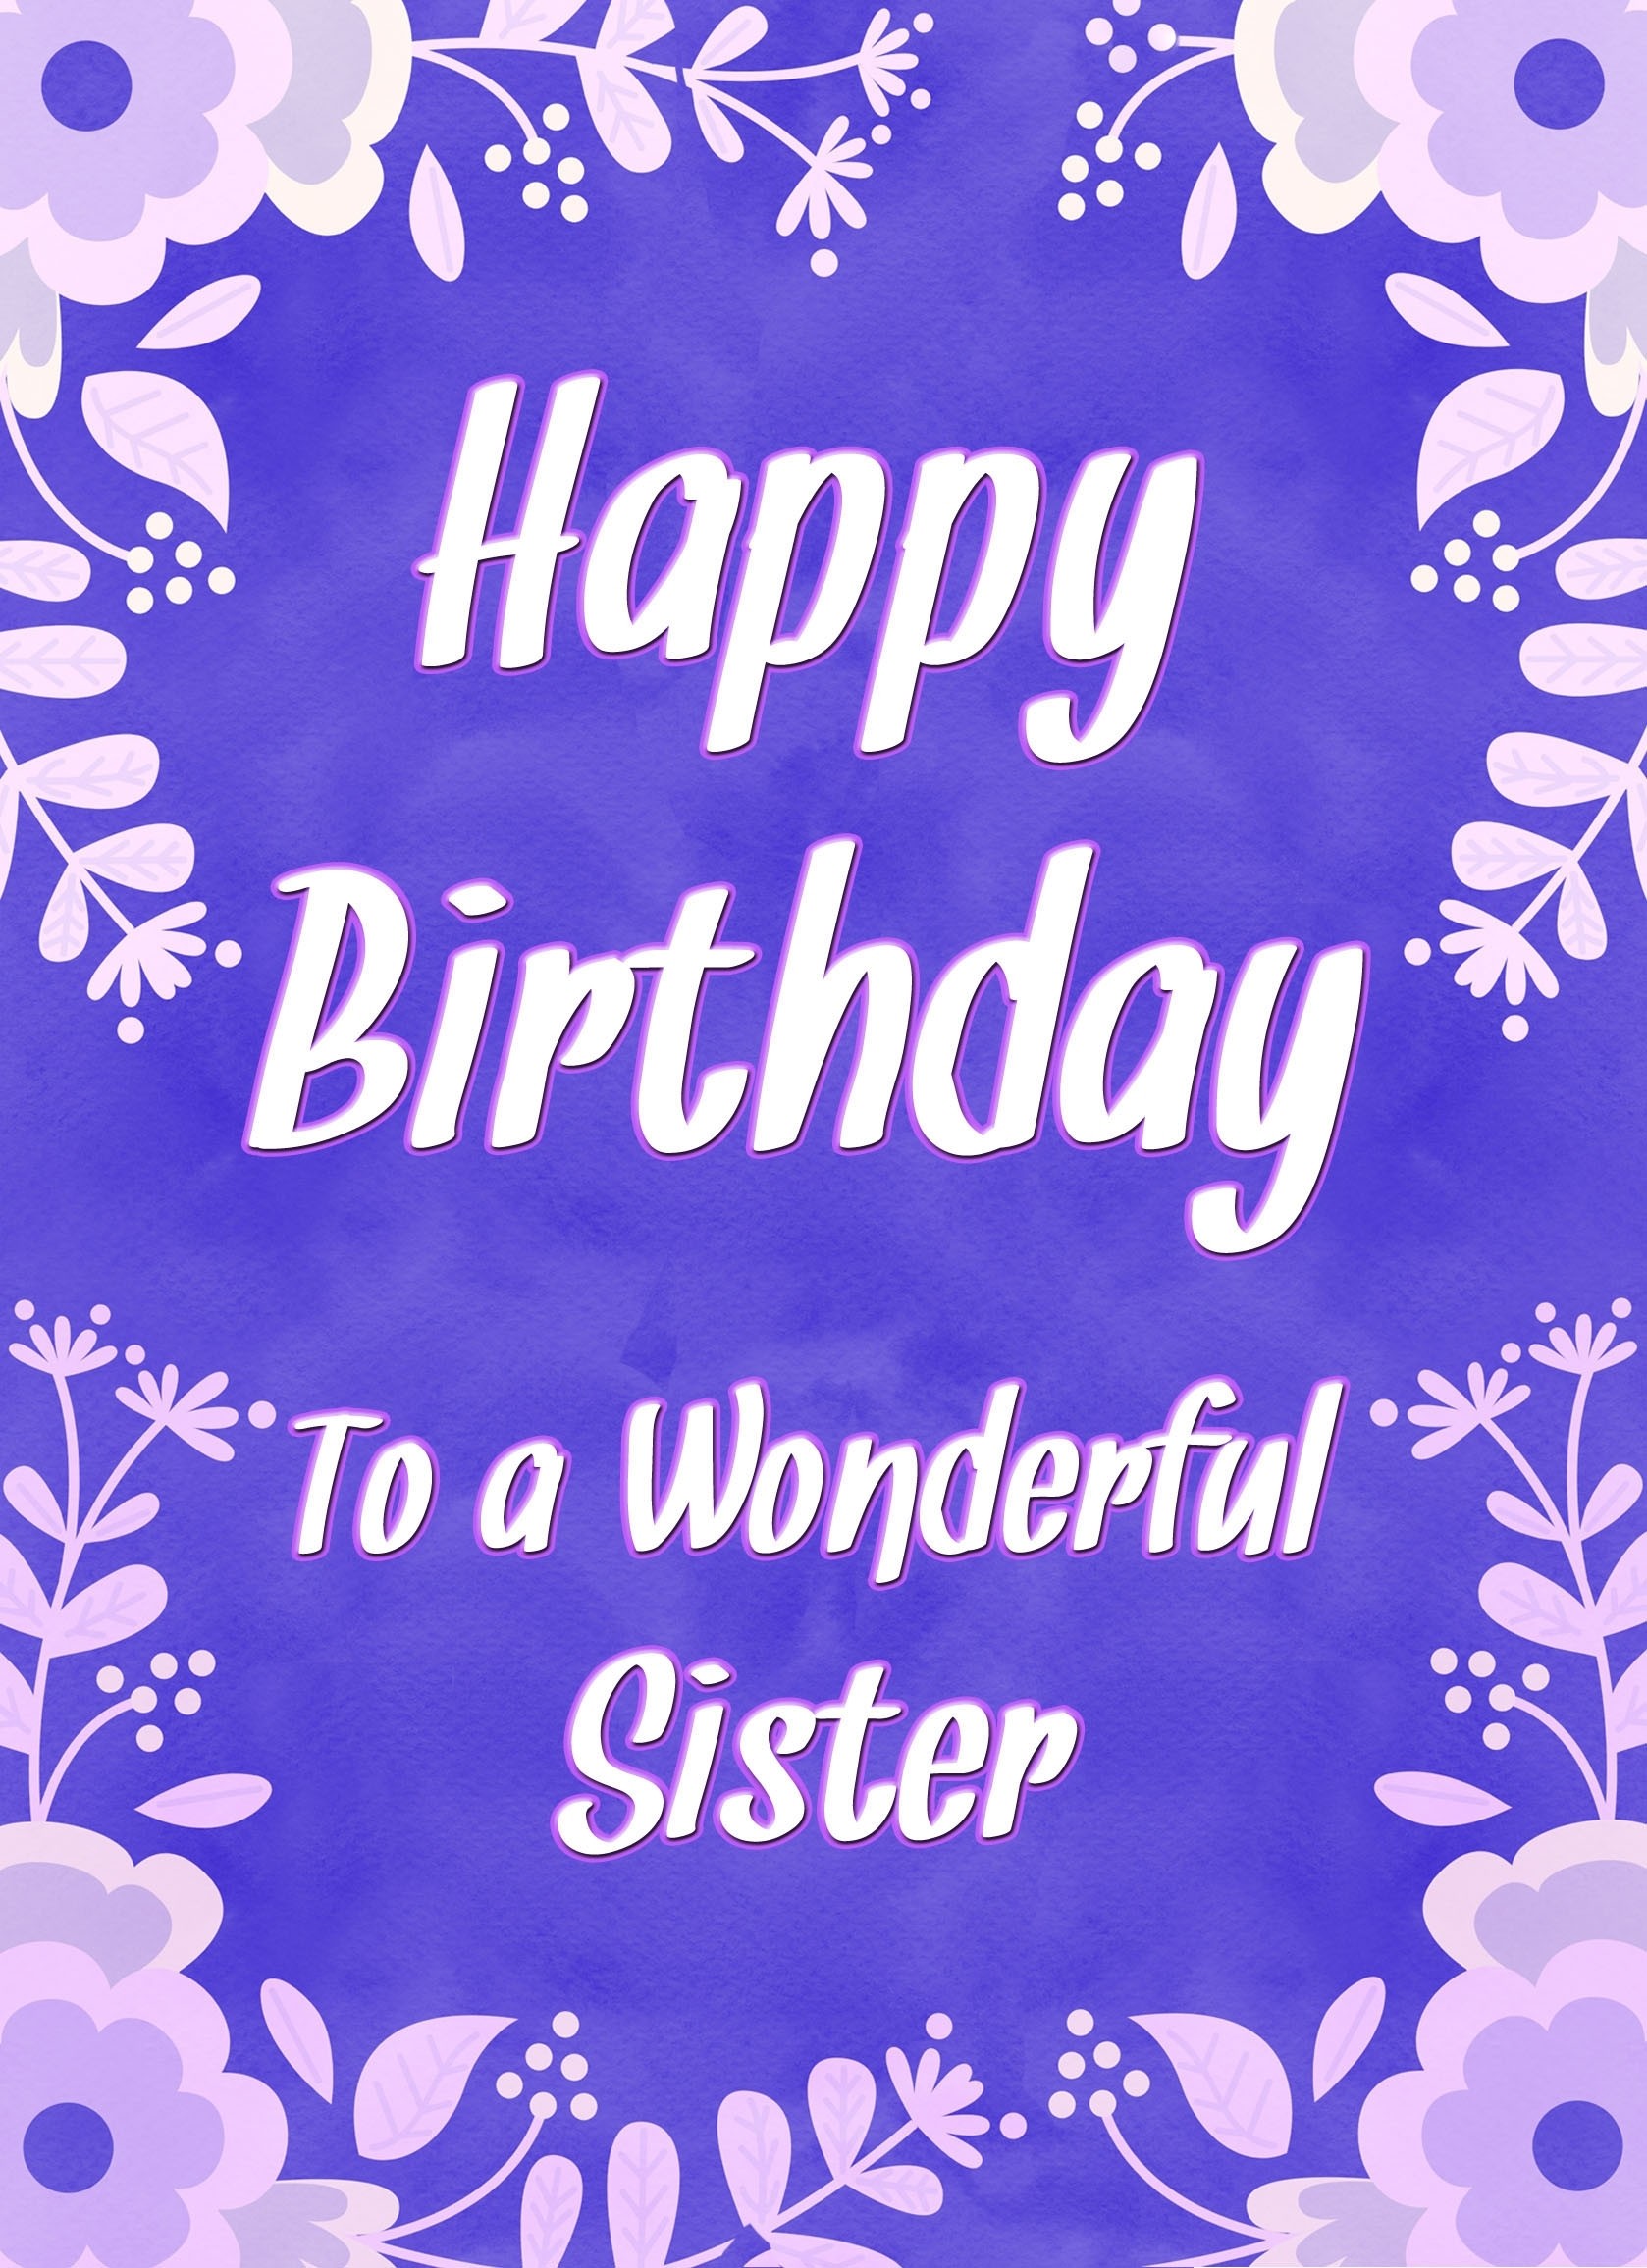 Birthday Card For Wonderful Sister (Purple Border)